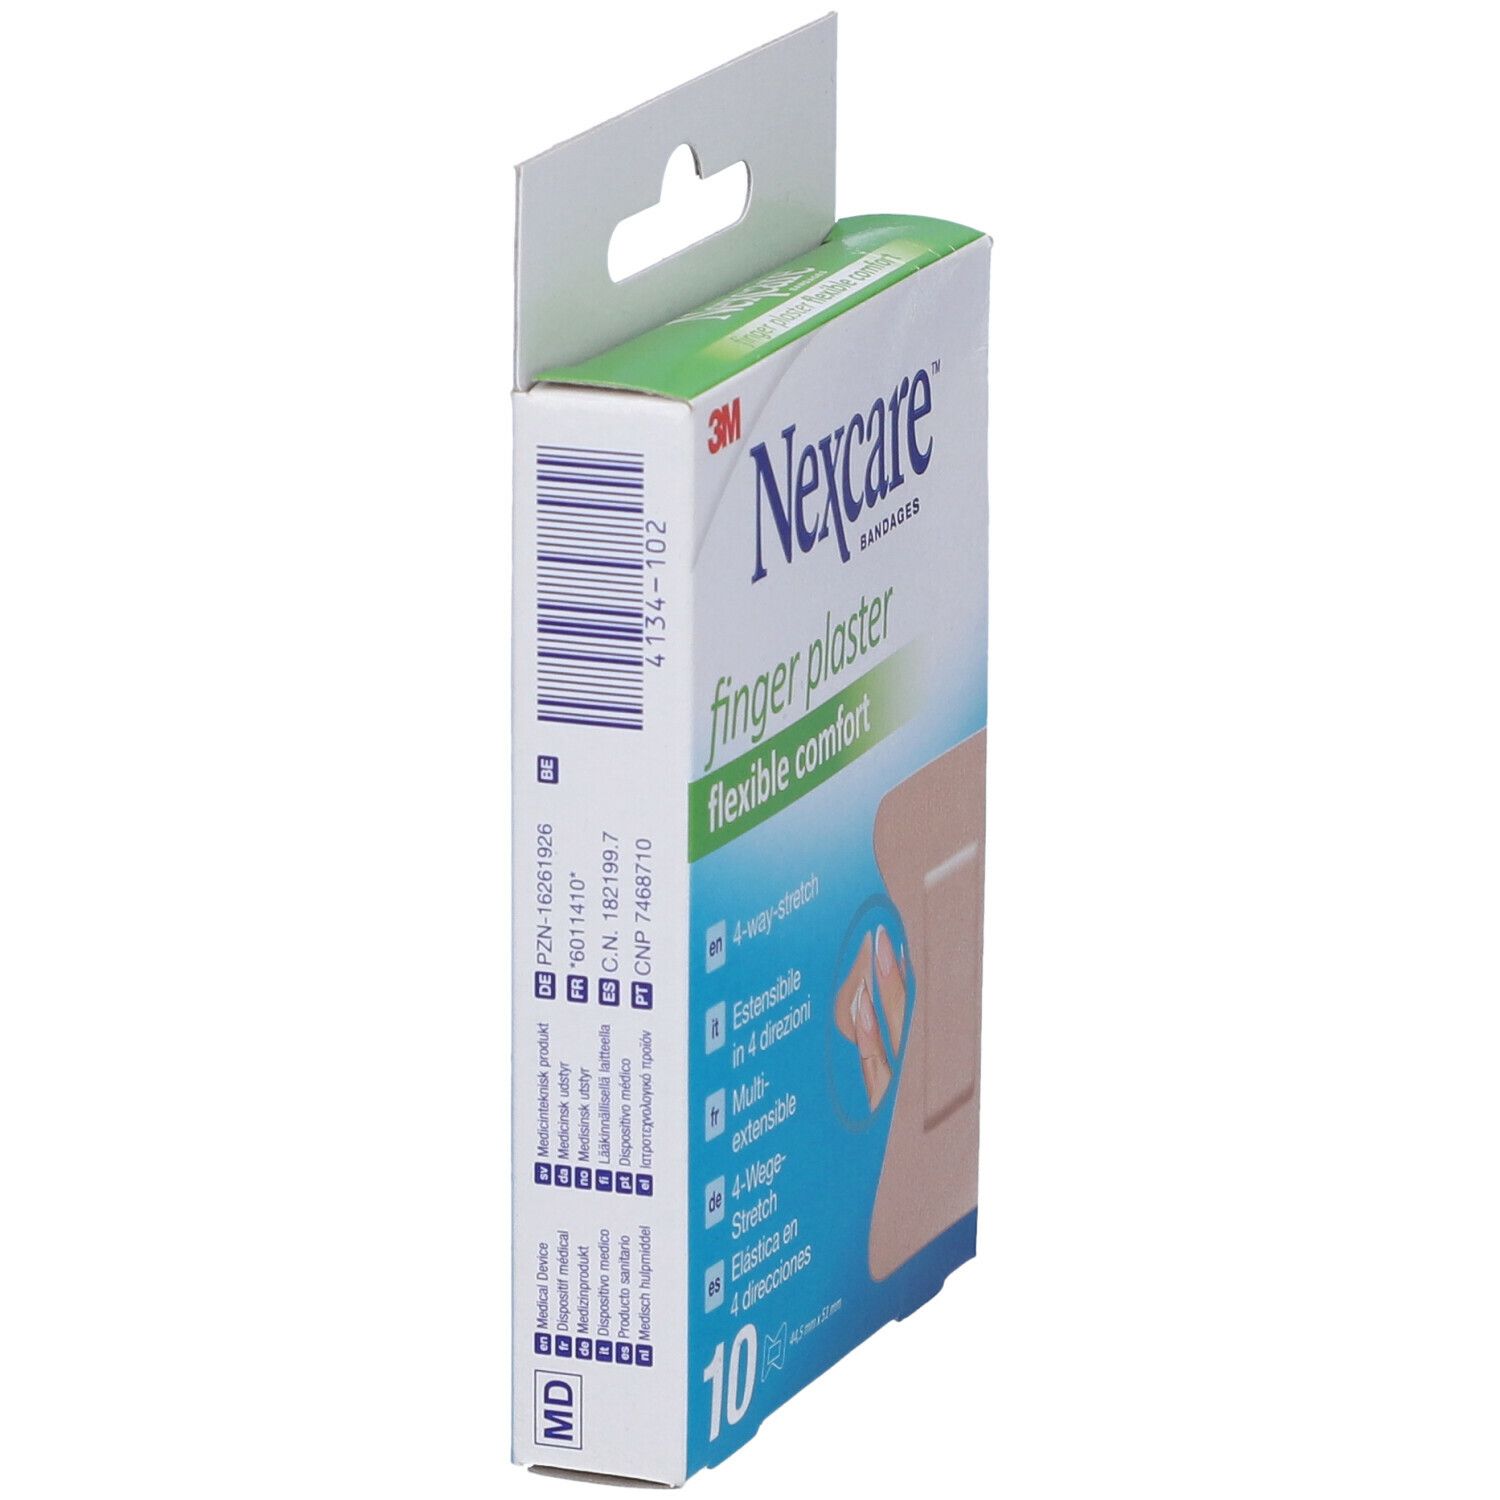 3M Nexcare™ Finger plaster flexible comfort 44,5 mm x 51 mm 1 pz